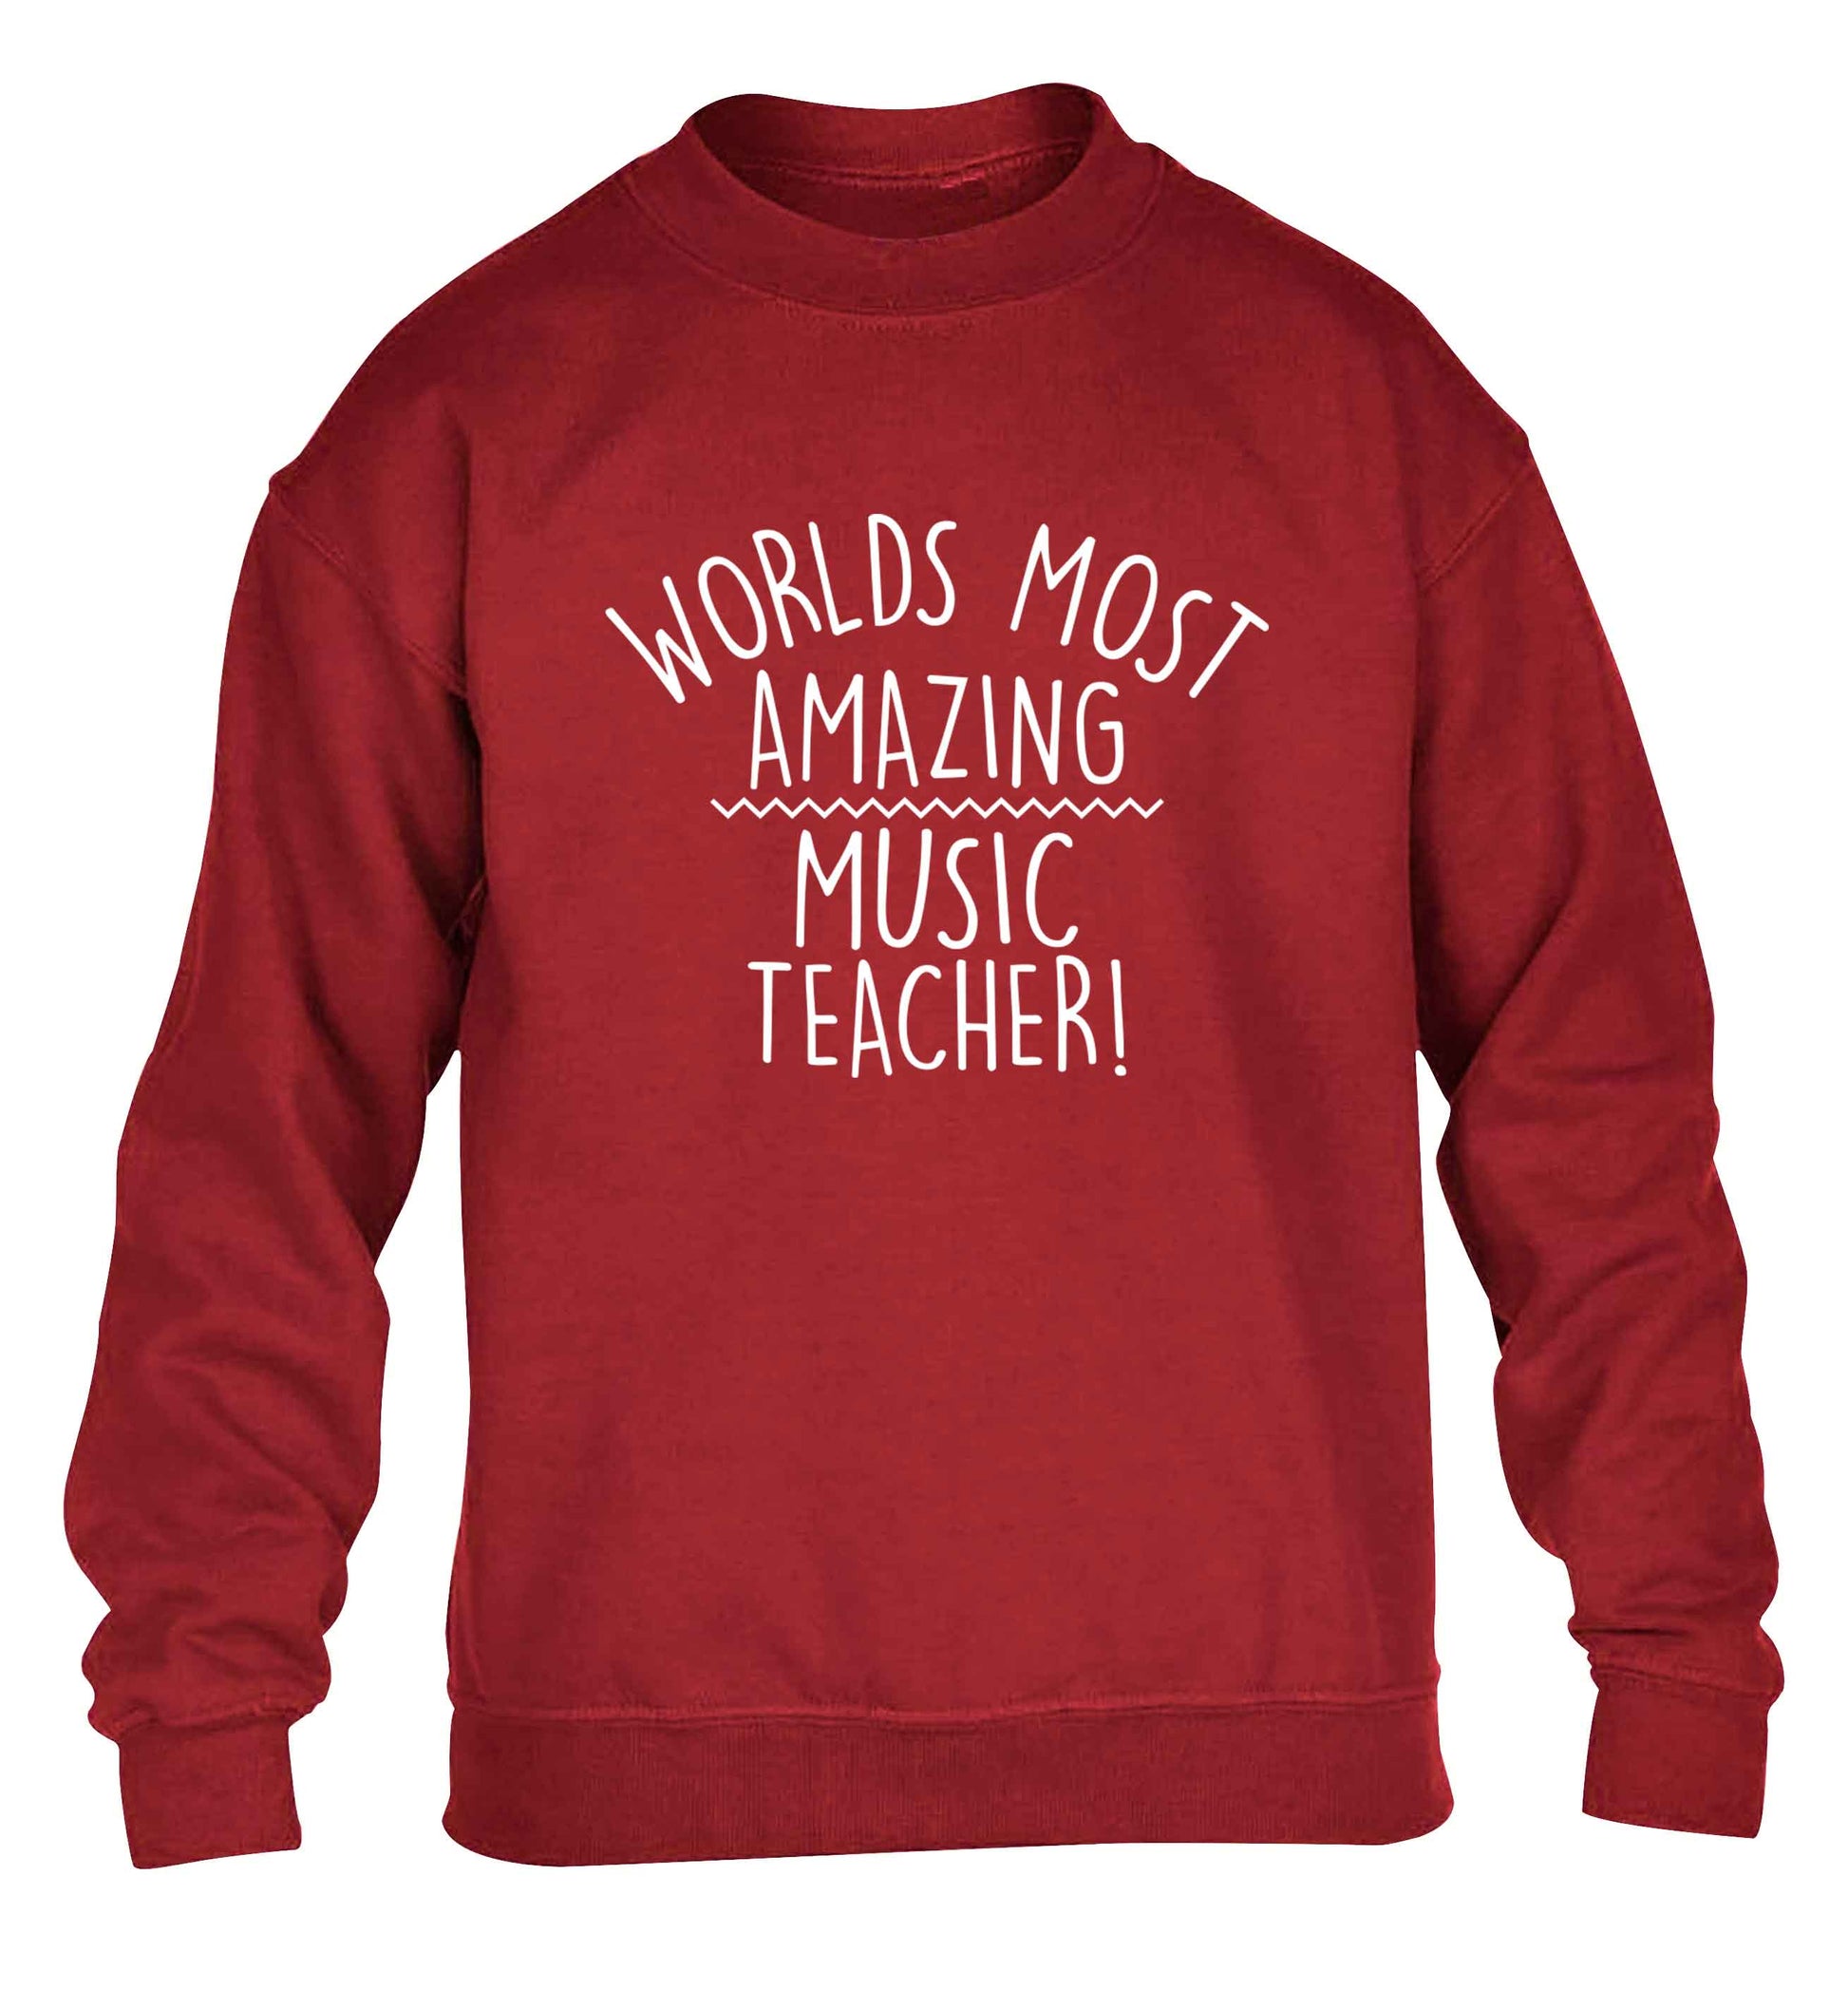 Worlds most amazing music teacher children's grey sweater 12-13 Years